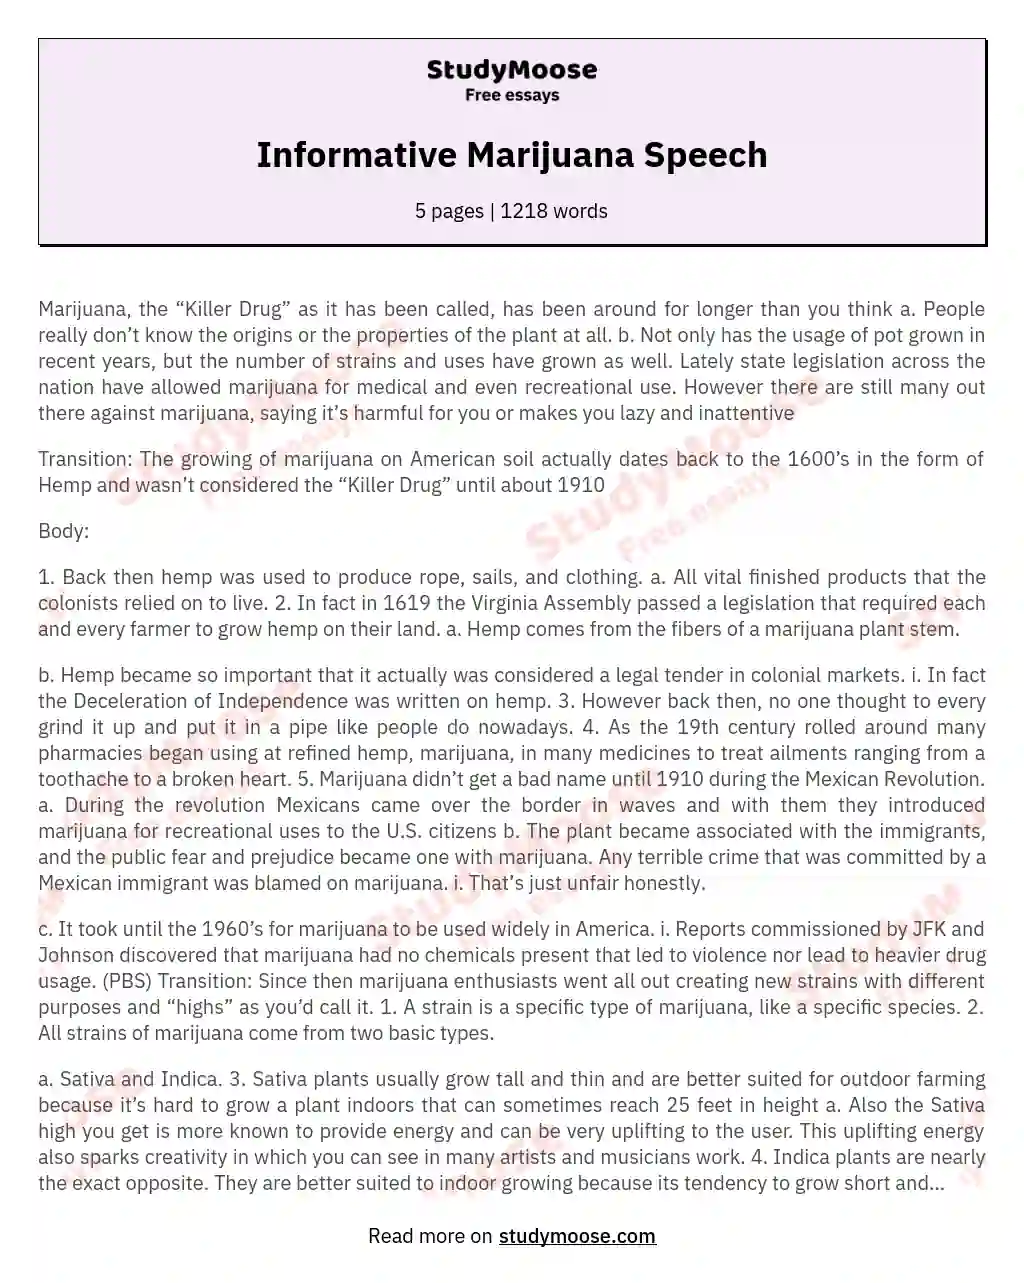 Informative Marijuana Speech essay